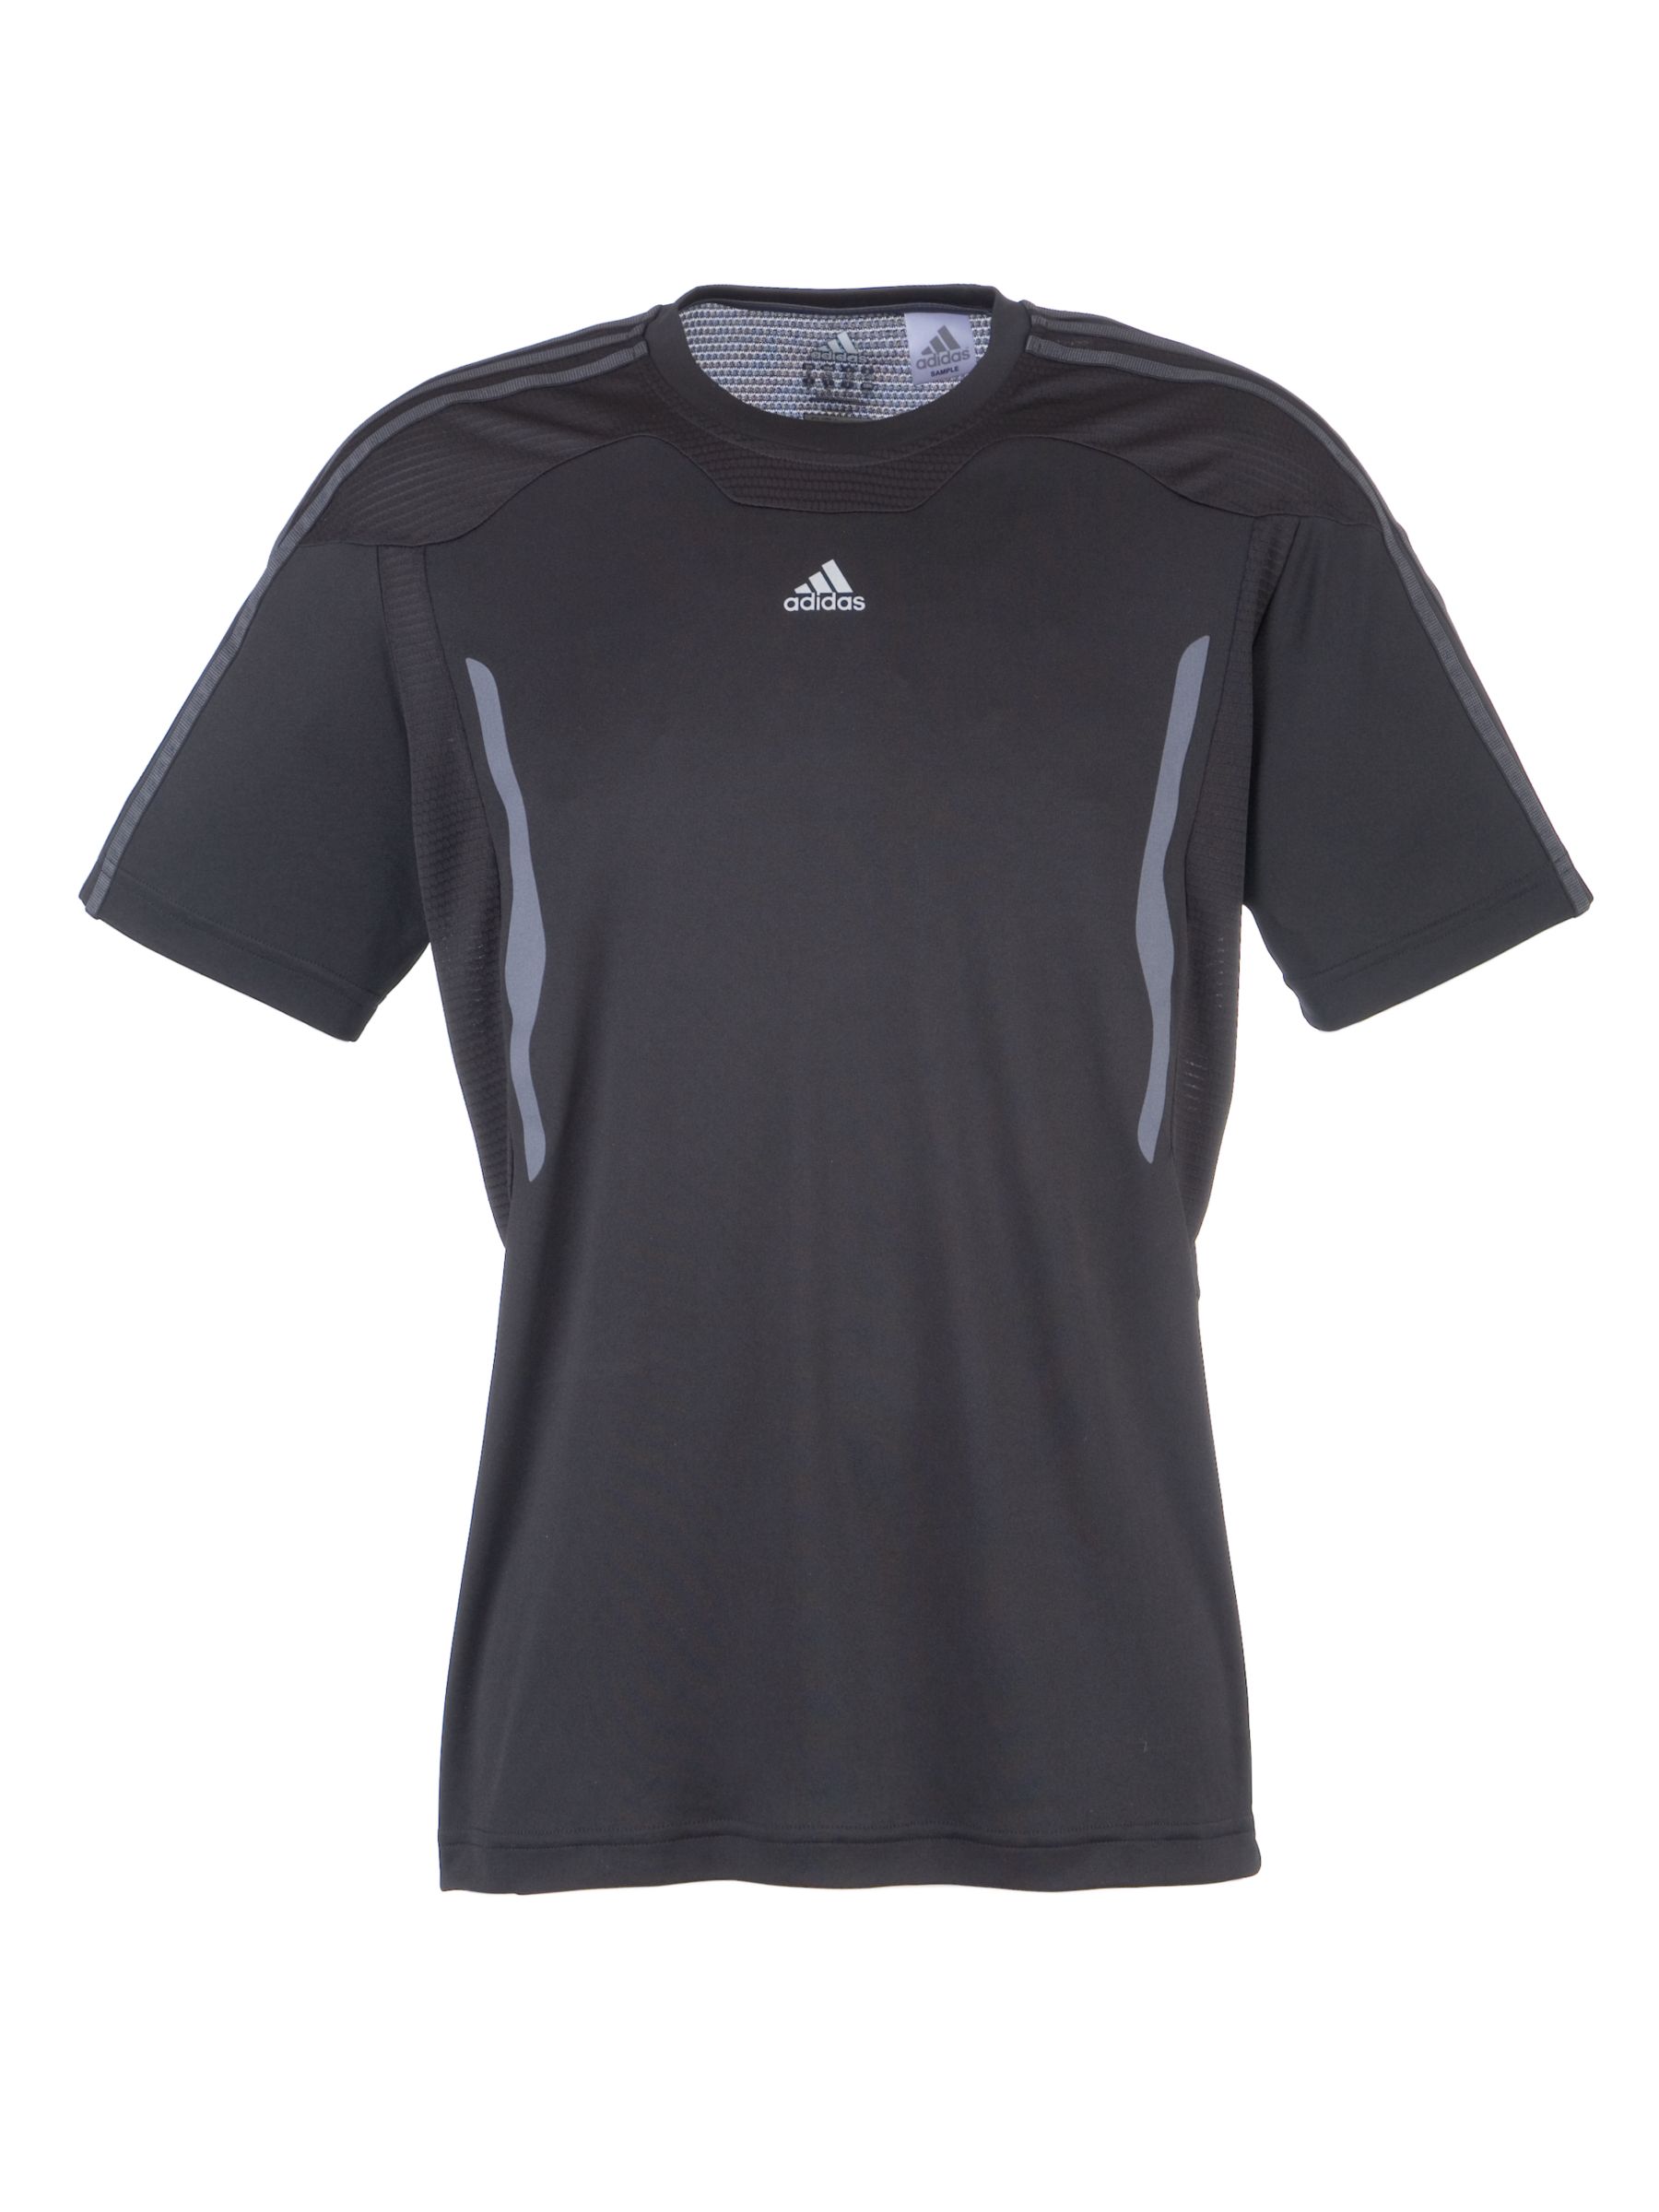 Adidas Clima 365 Short Sleeve T-Shirt, Black